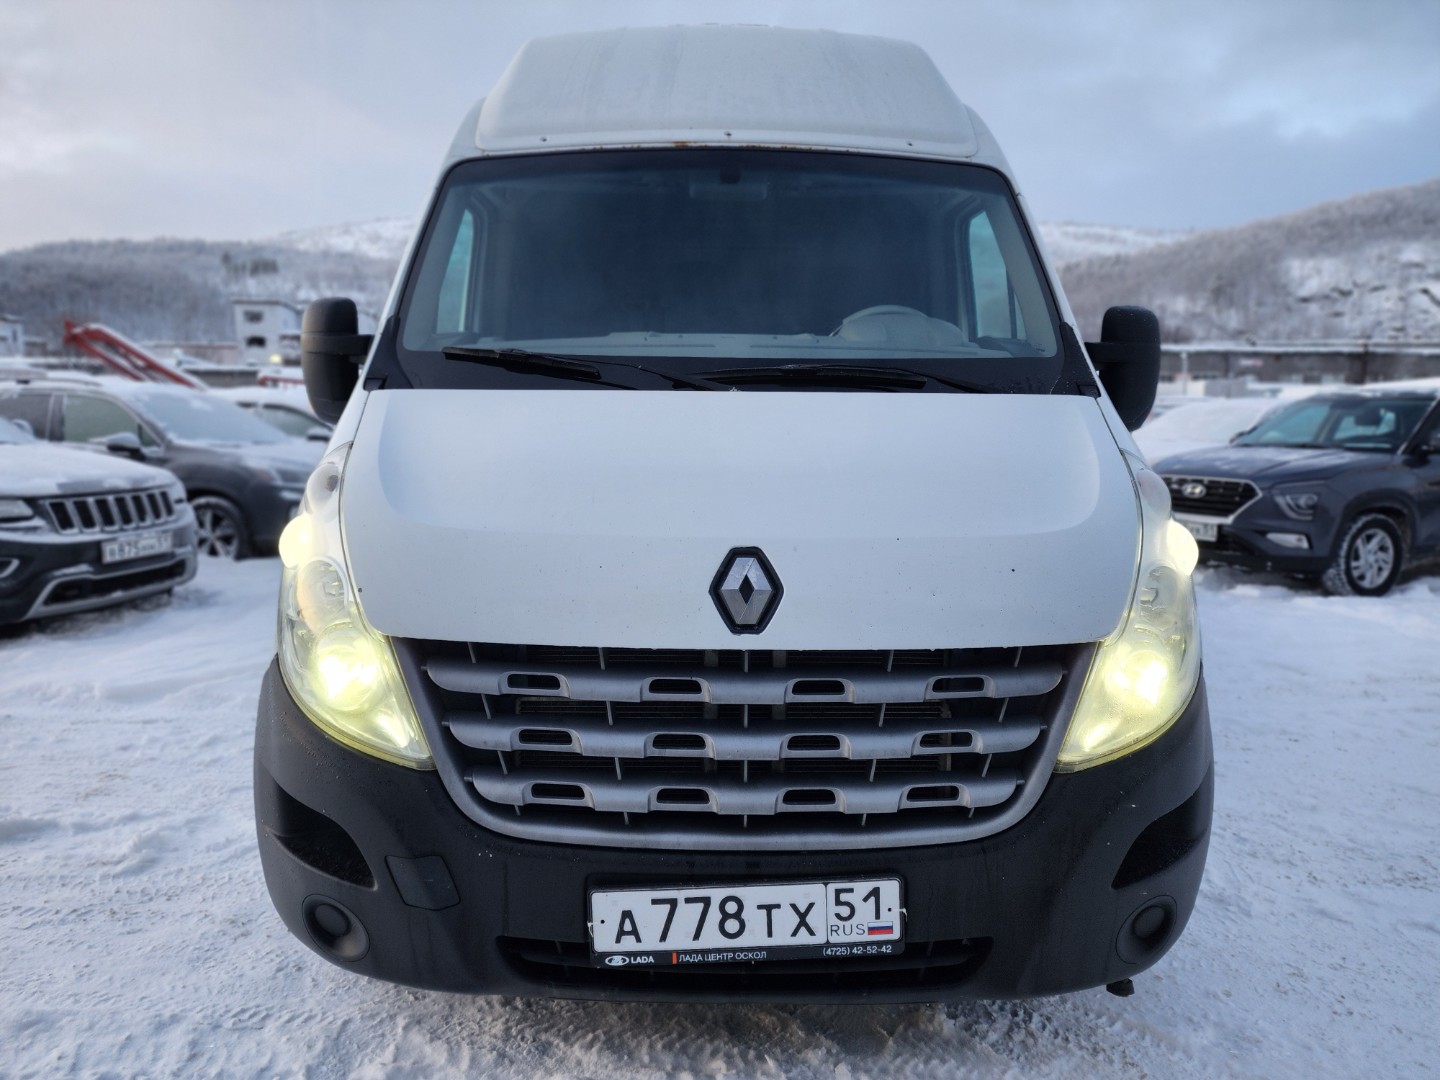 Renault Renault Master, 2013 г.в., пробег 334 499 км, цена, фото, Мурманск